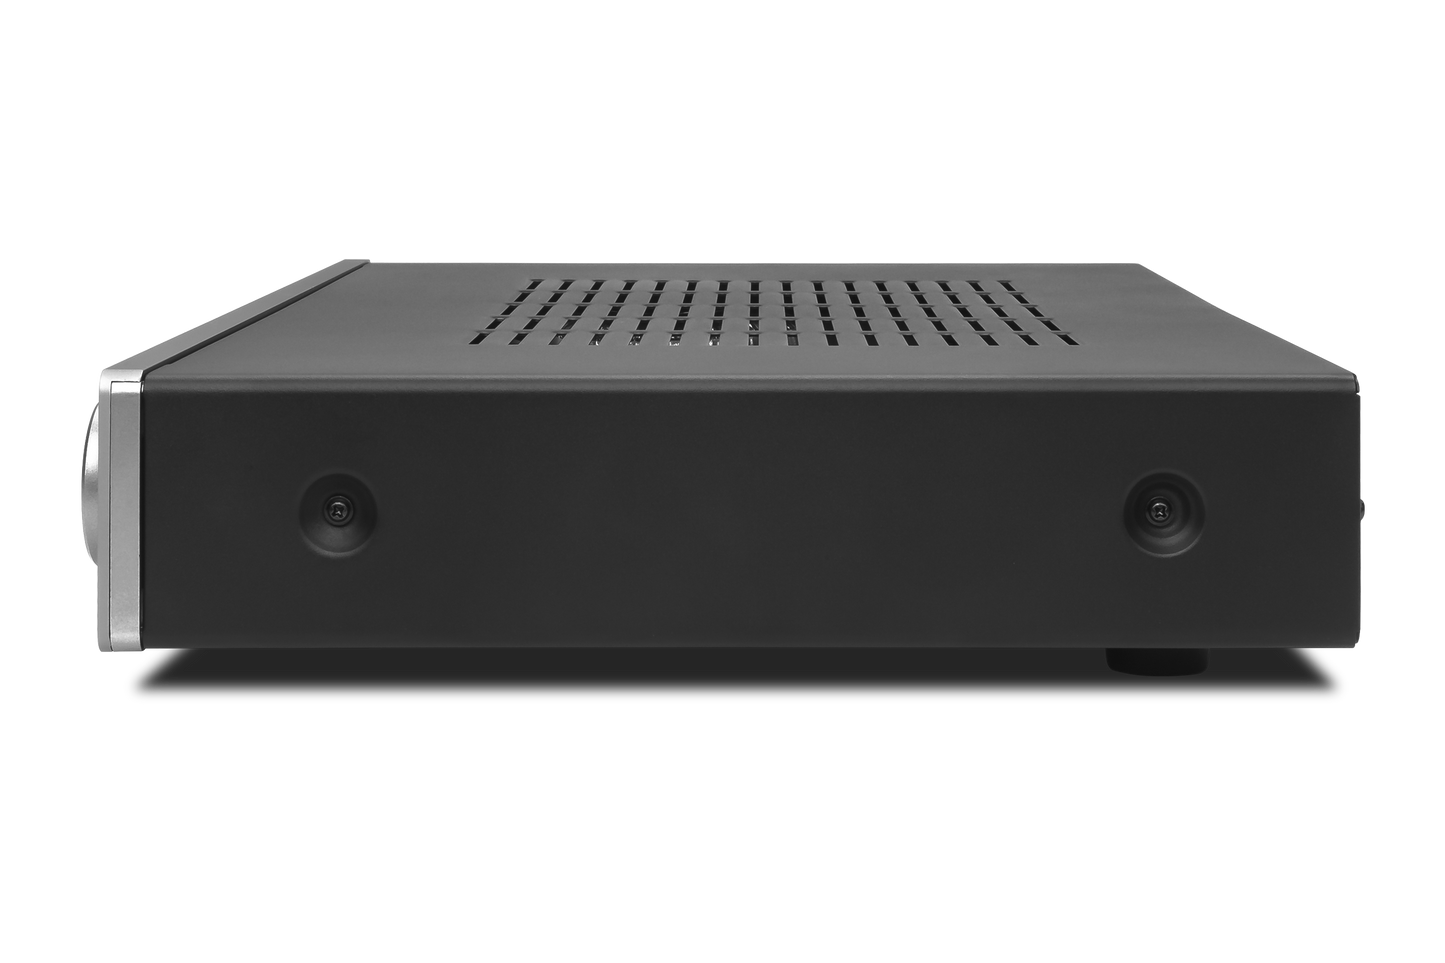 AXA35-integrated amplifier-Cambridge Audio-PremiumHIFI